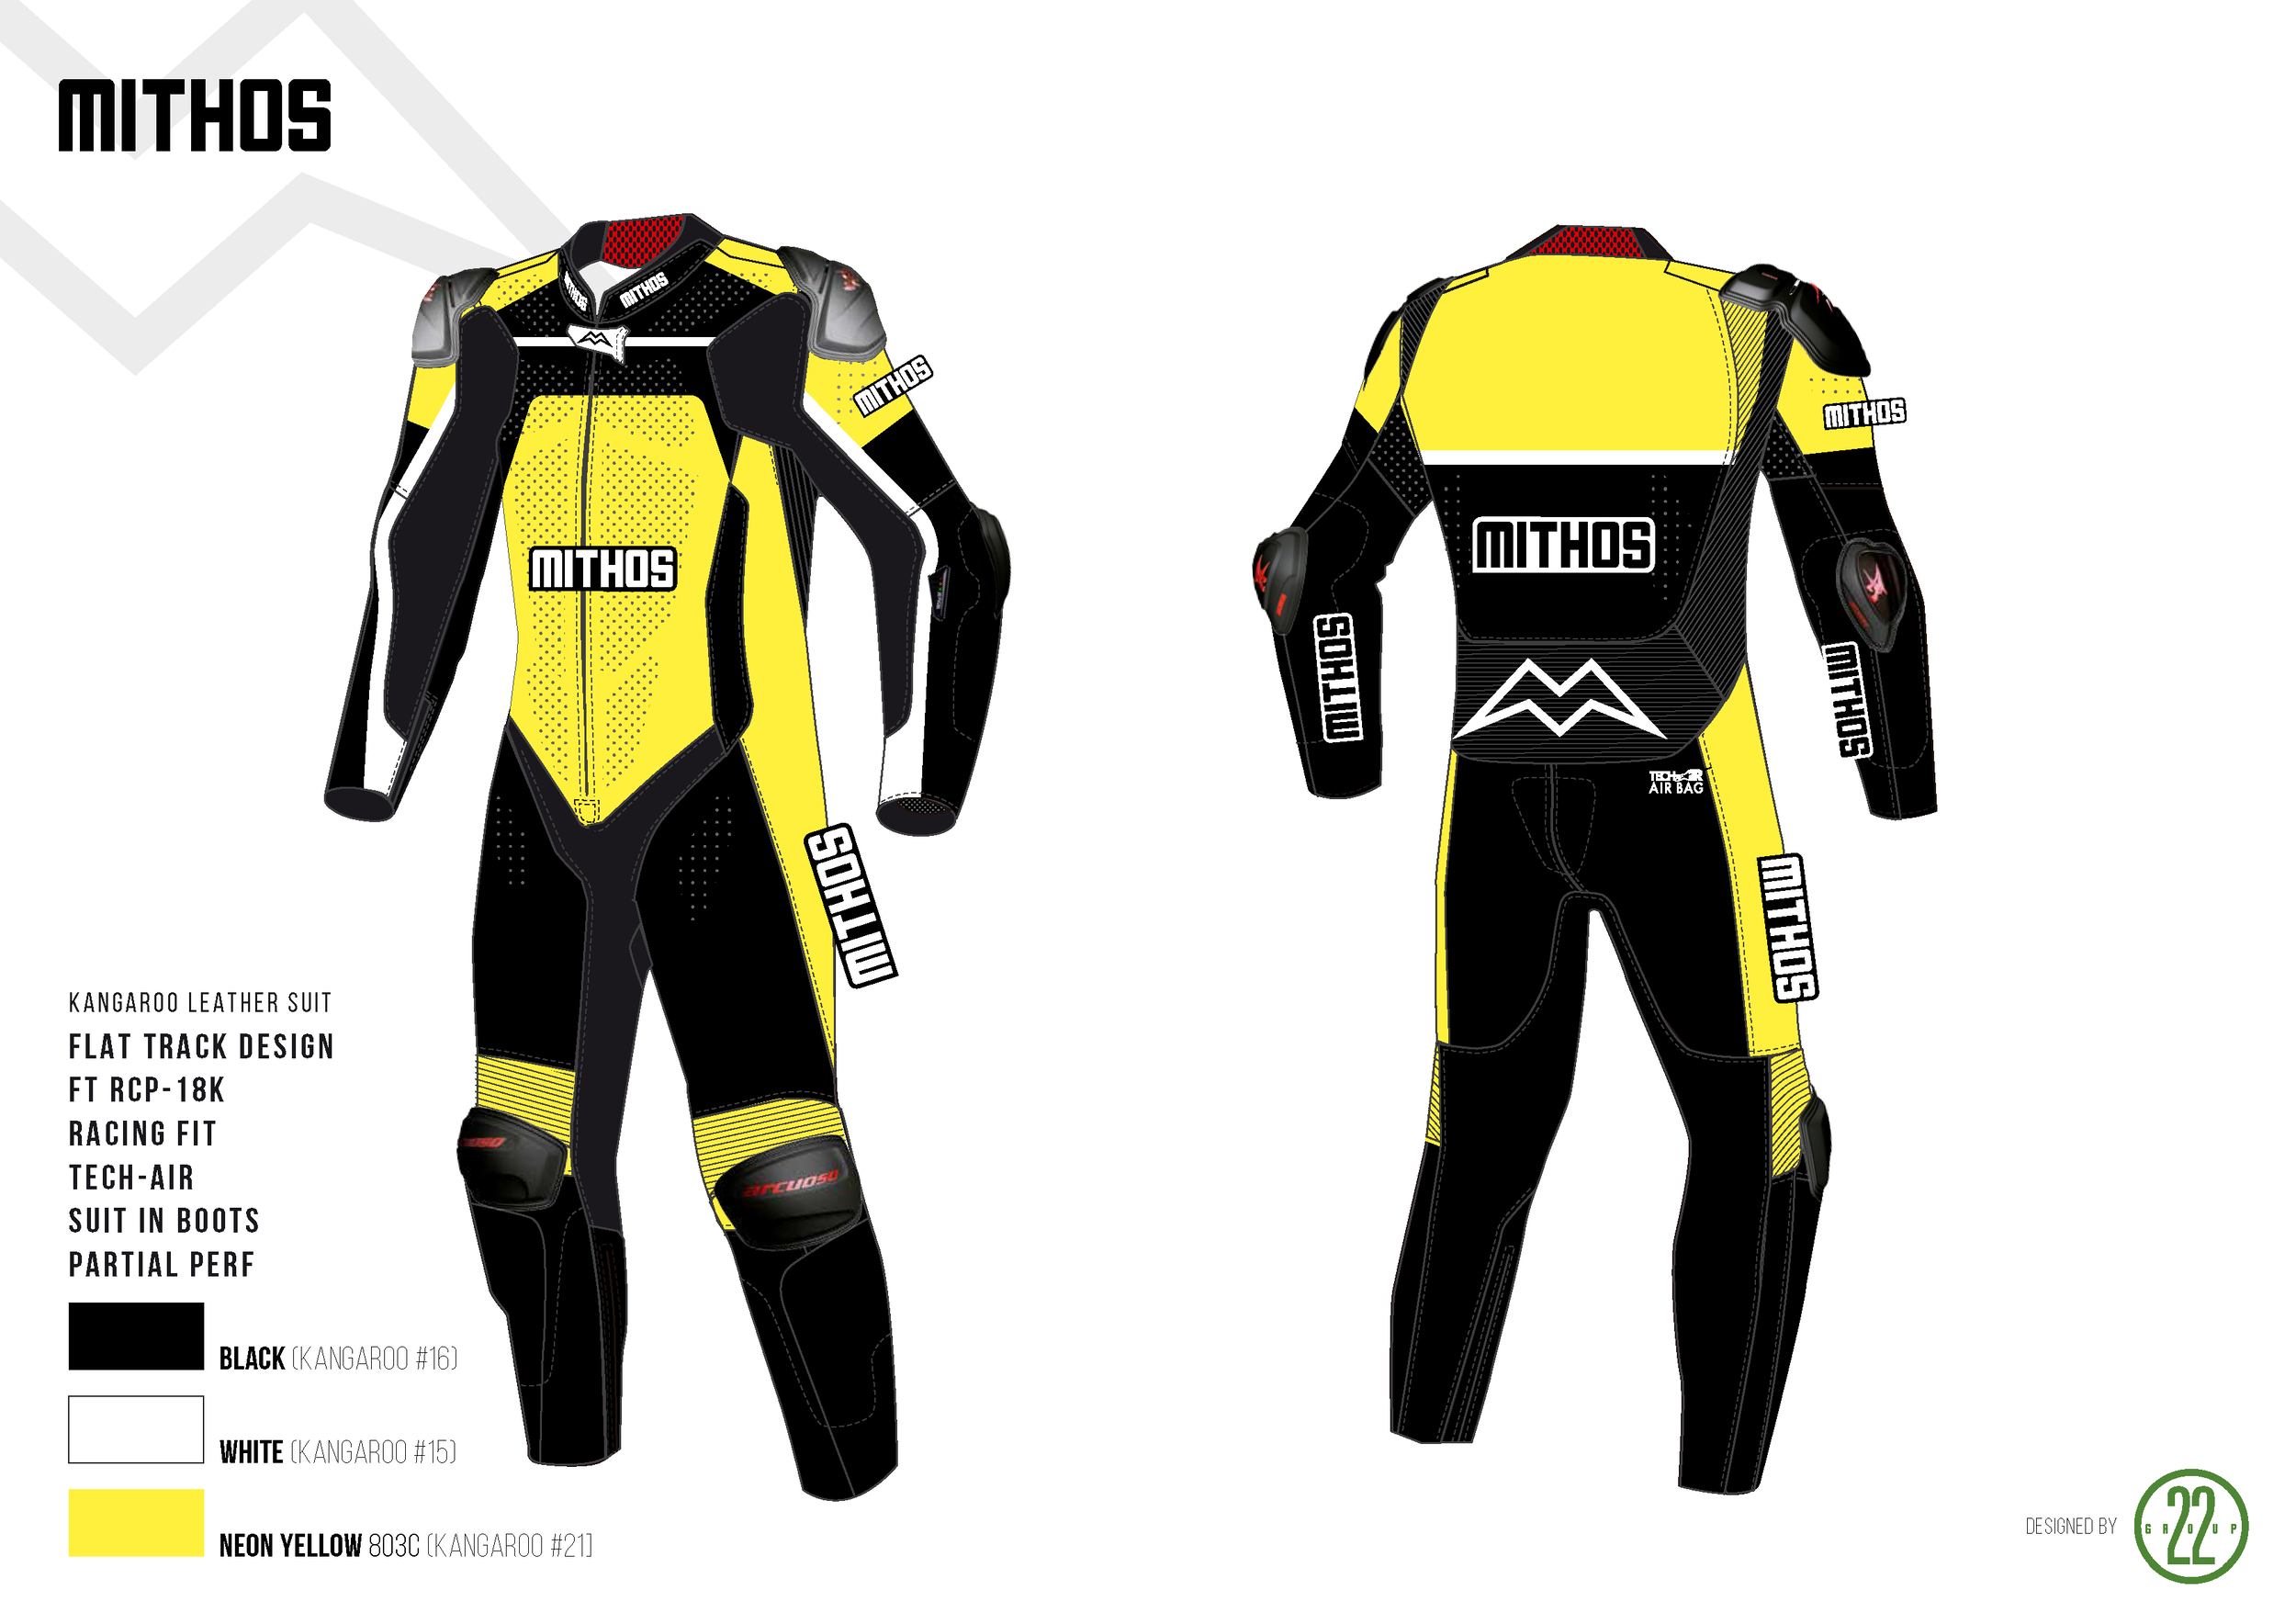 Mithos - Kangaroo Leather Suit - Flat Track Racing Fit Design